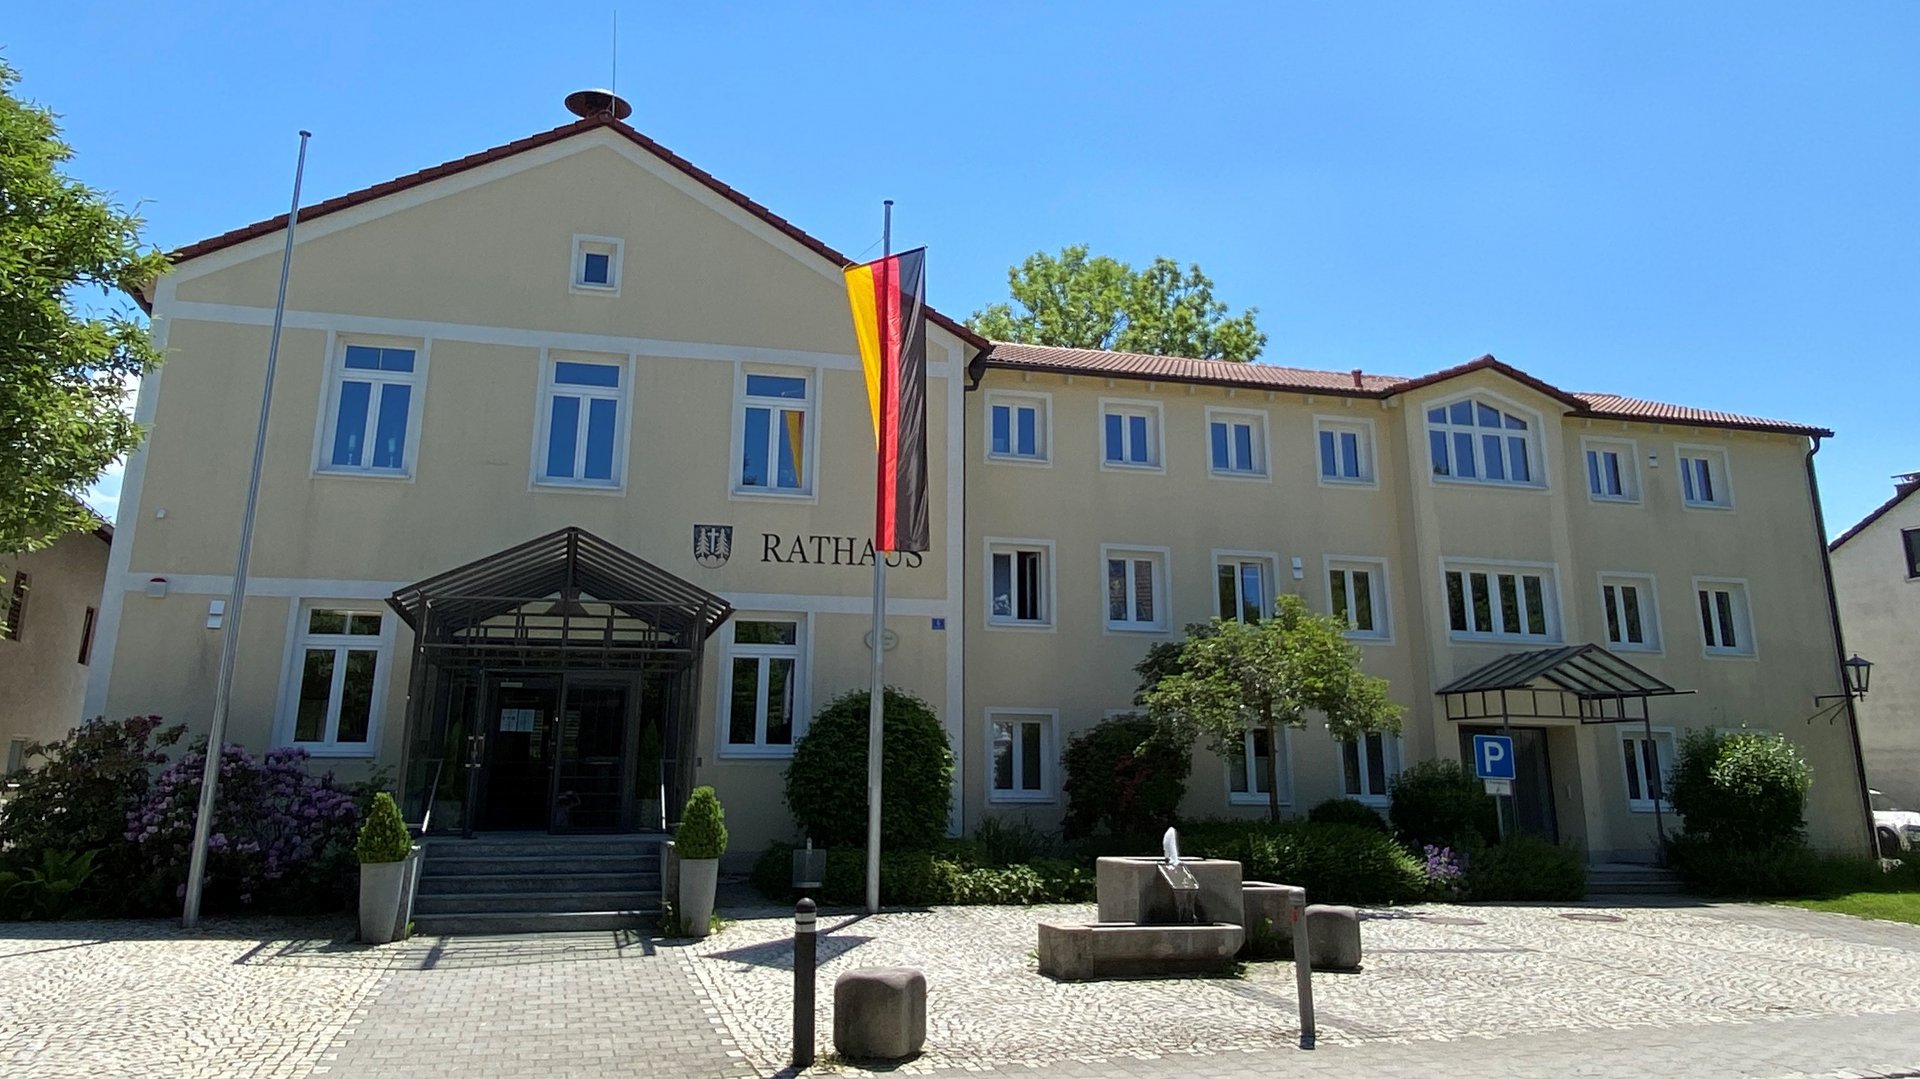 Rathaus Forstinning